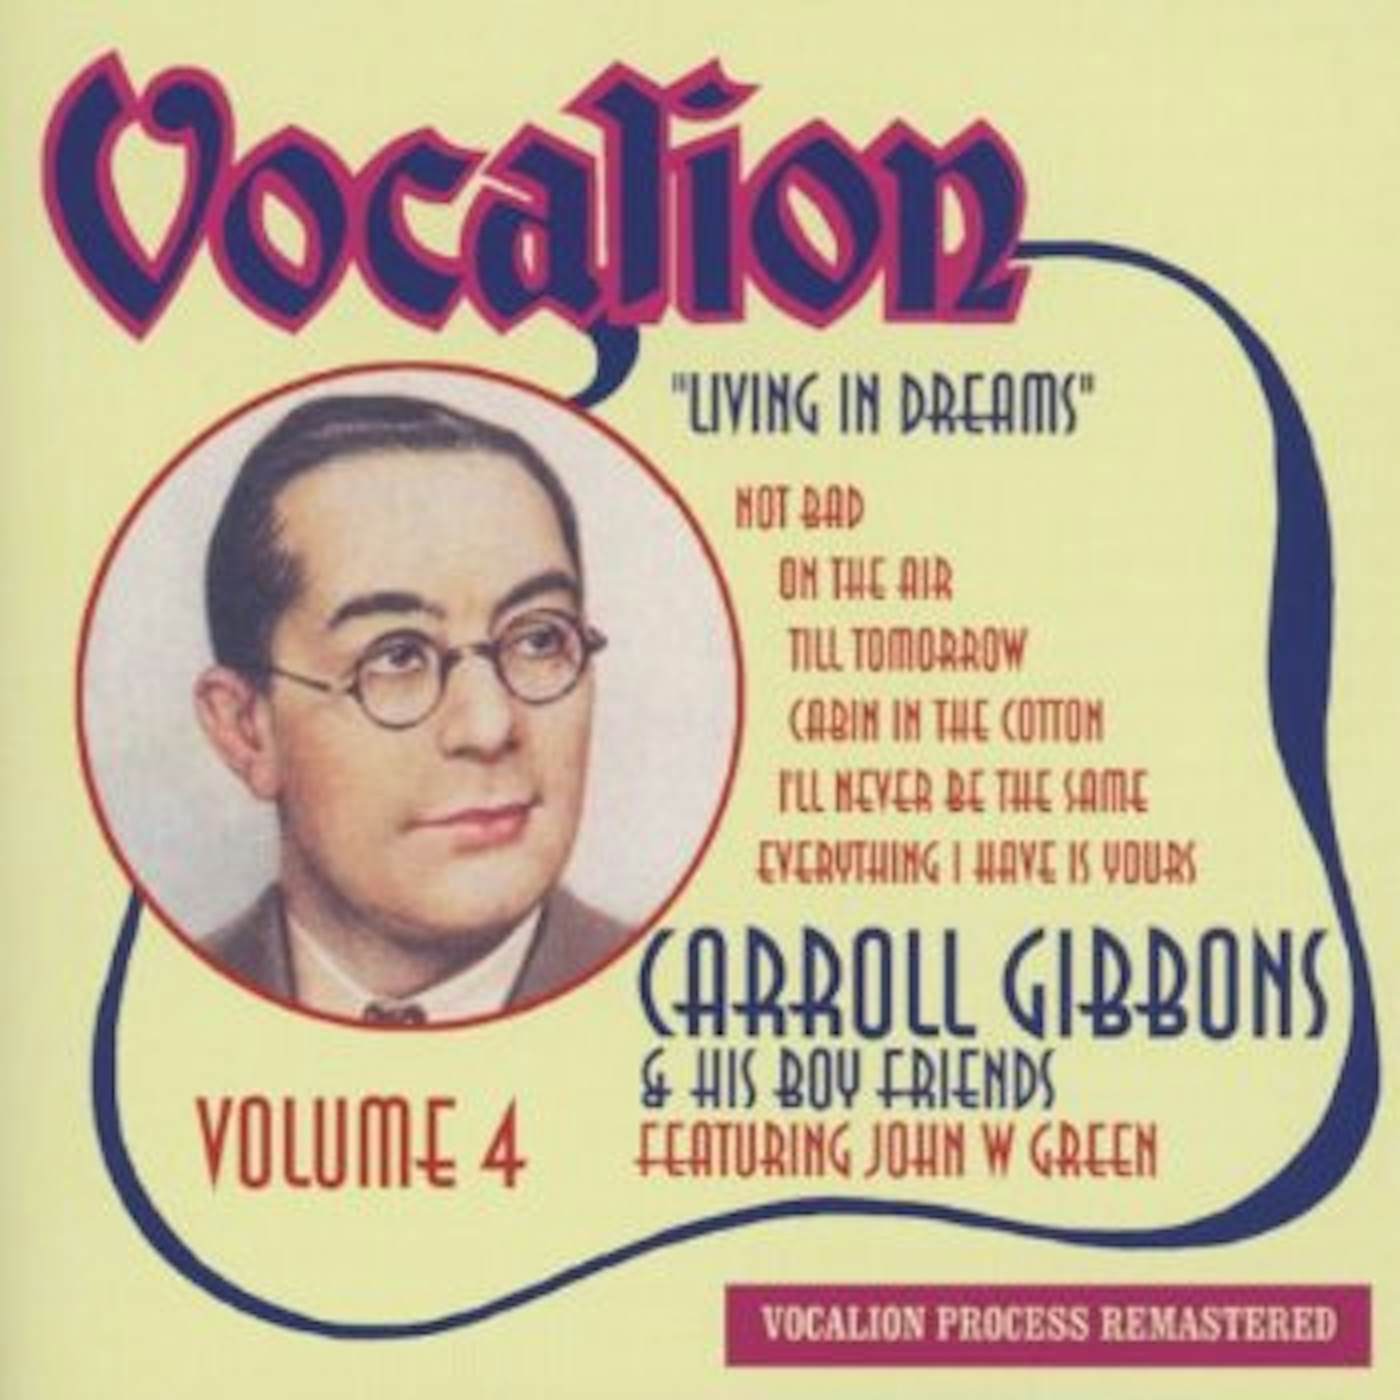 Carroll Gibbons LIVING IN DREAMS 4 CD